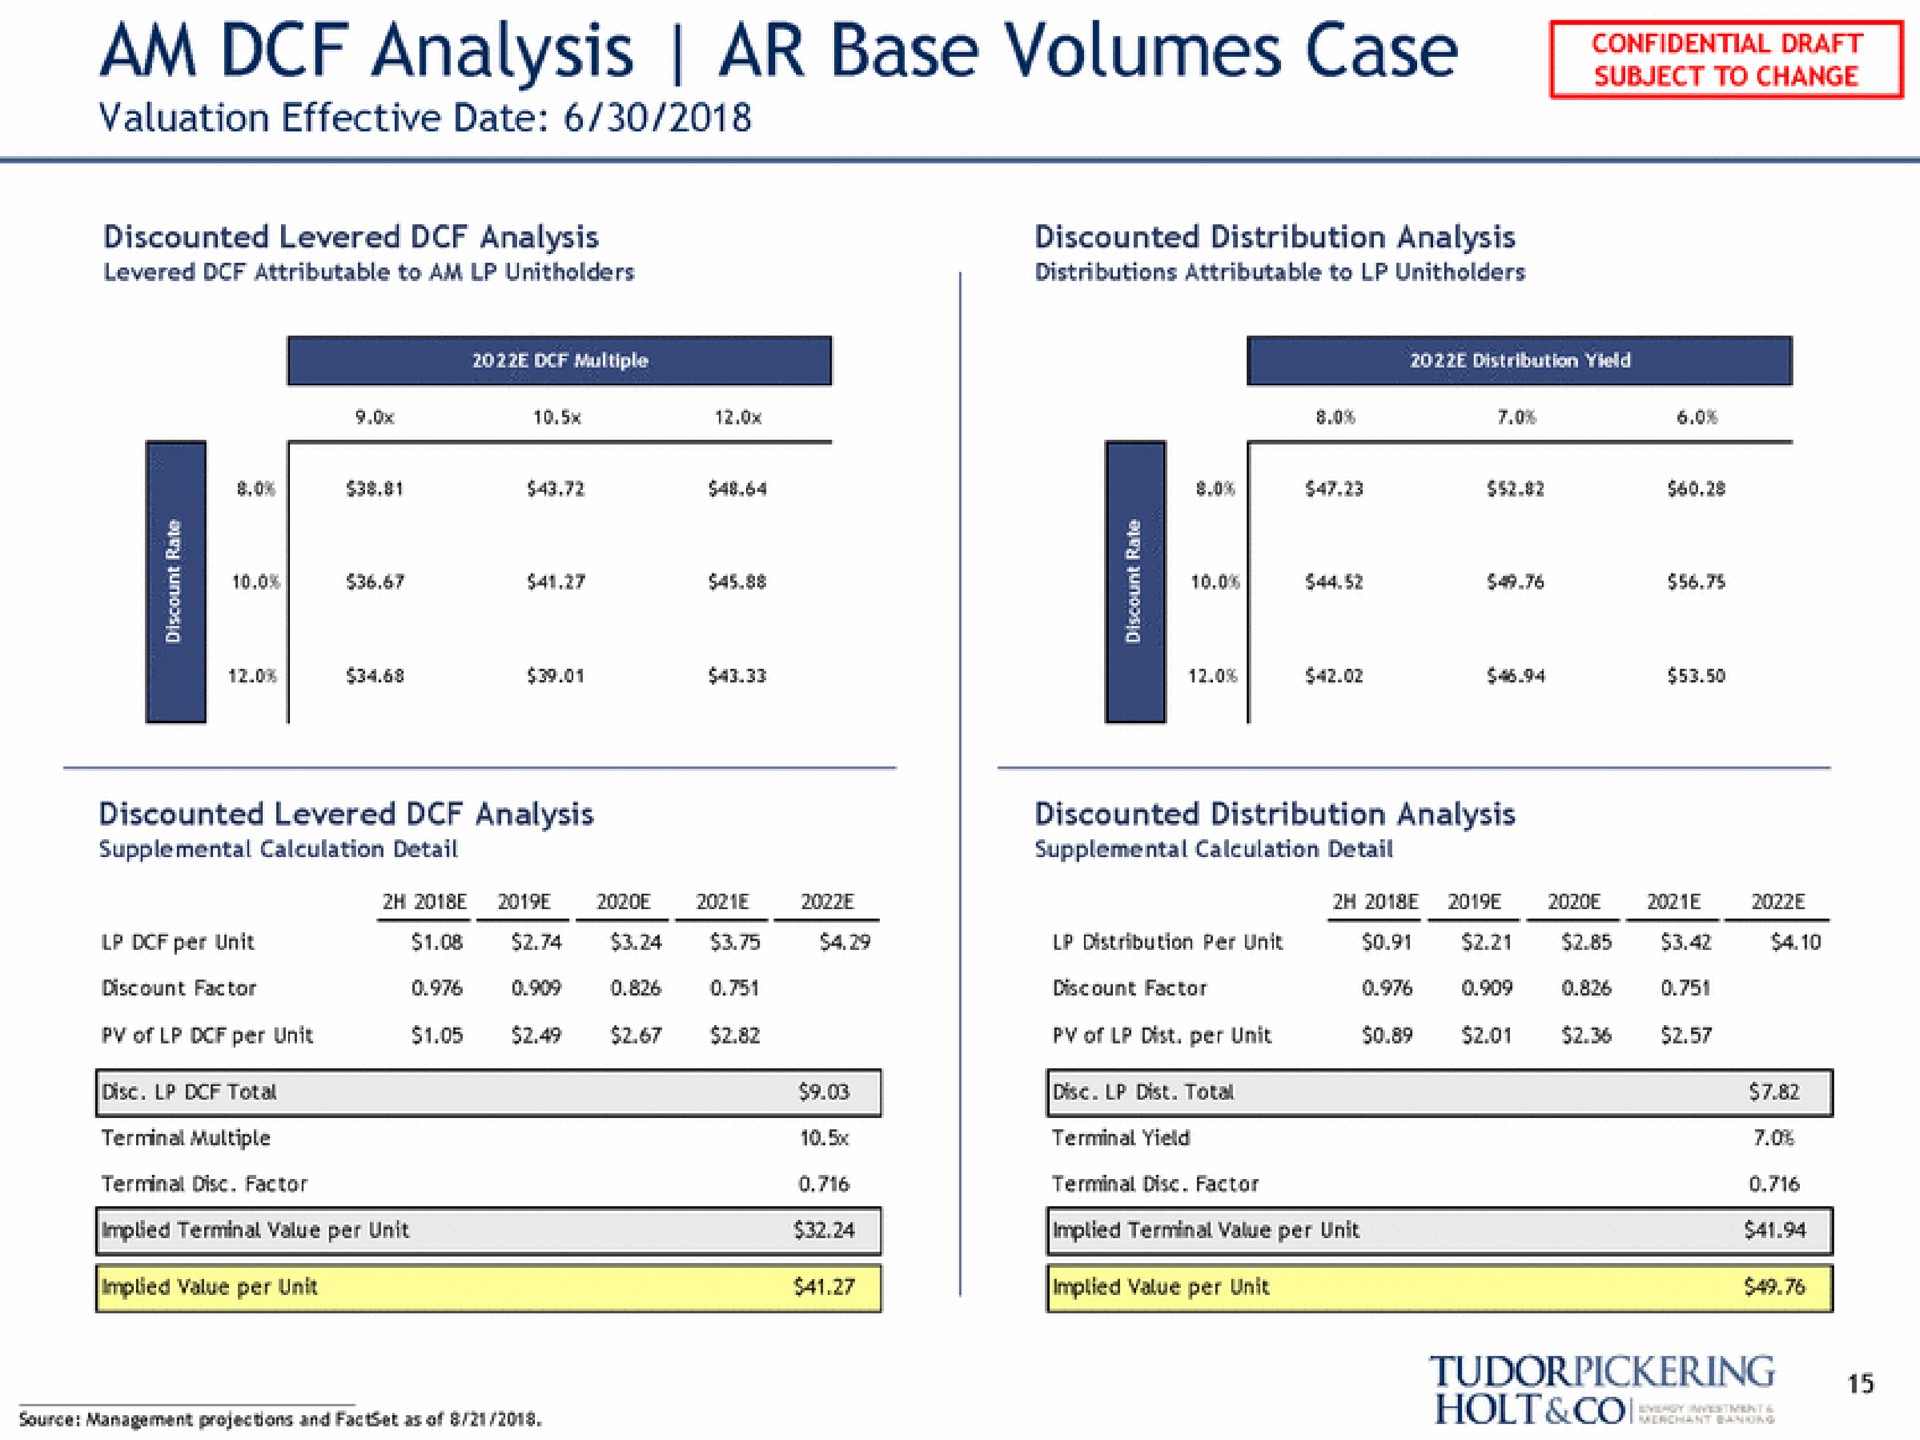 am analysis base volumes case vanes | Tudor, Pickering, Holt & Co